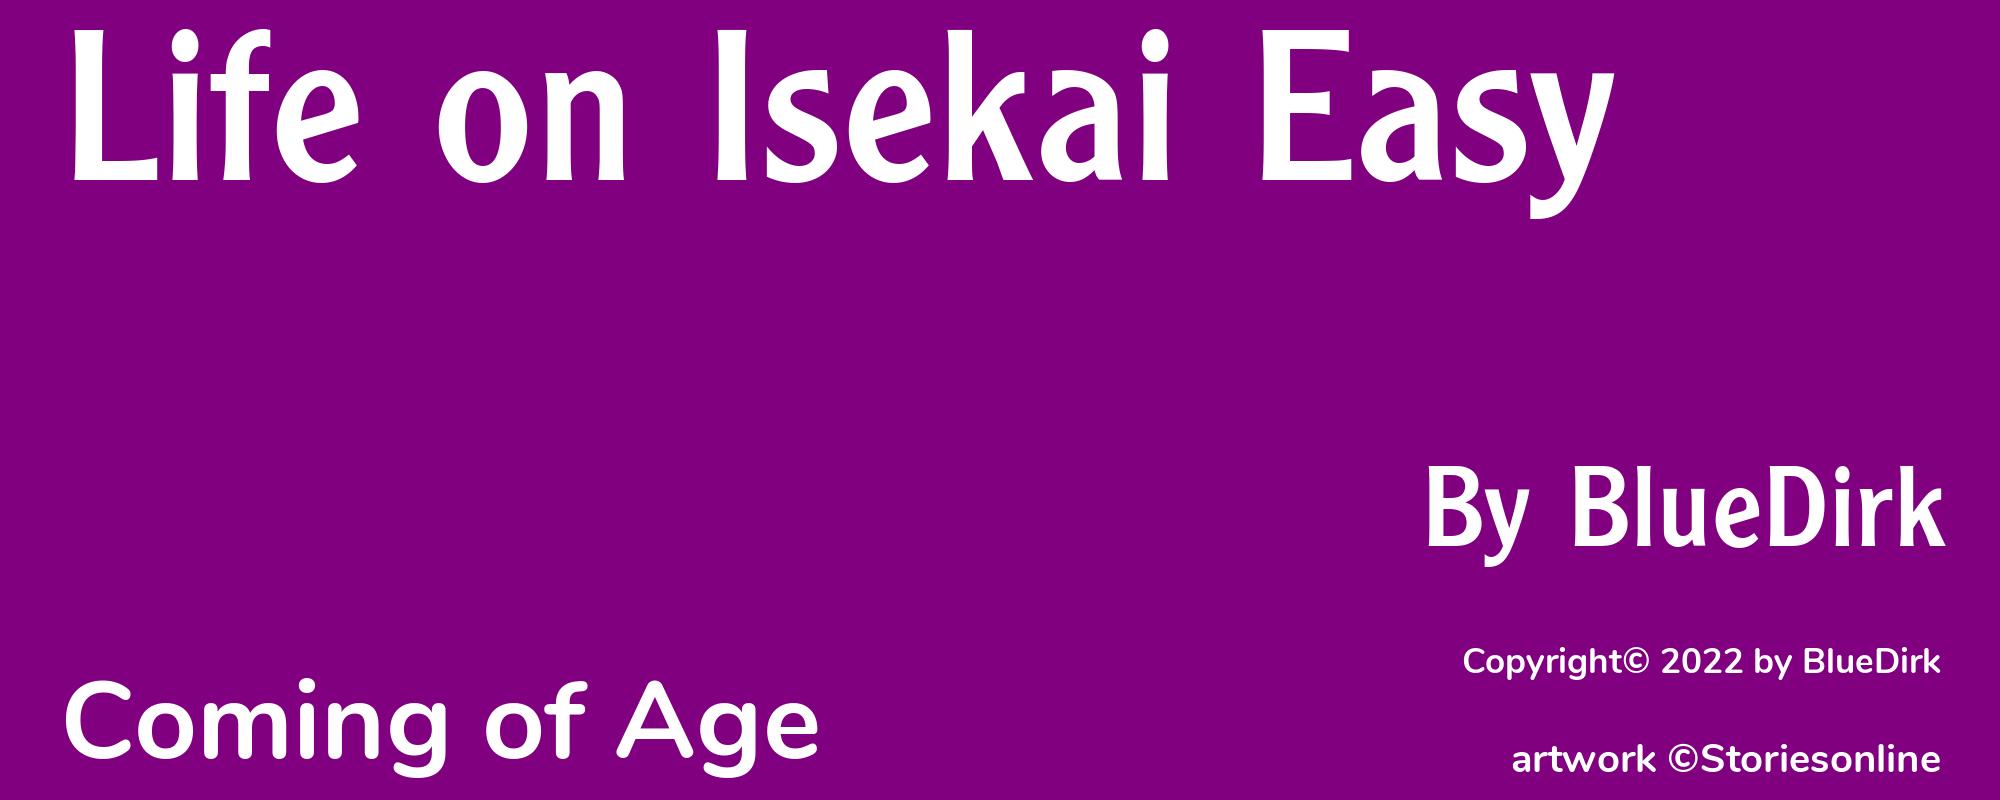 Life on Isekai Easy - Cover